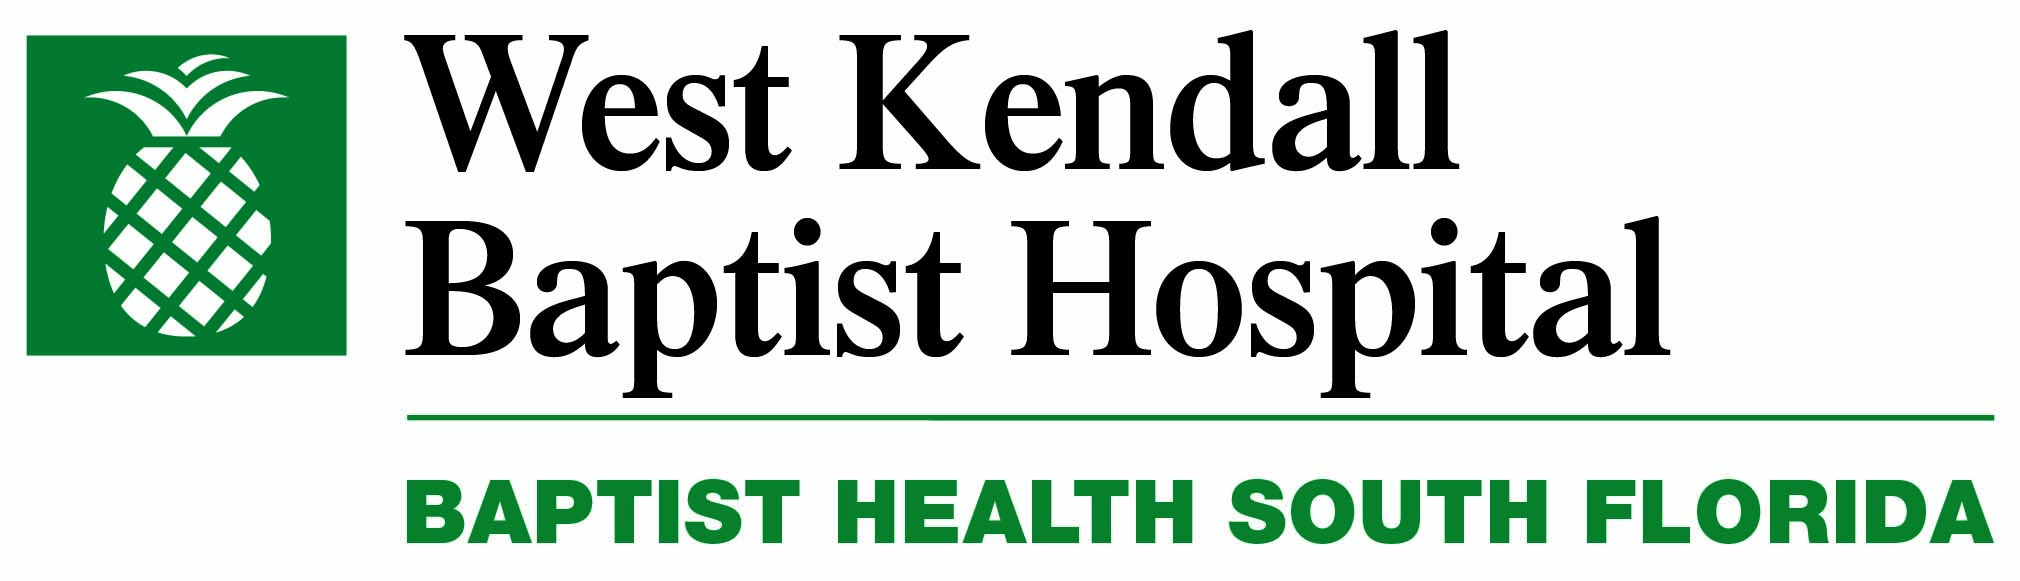 West Kendall Baptist Hospital